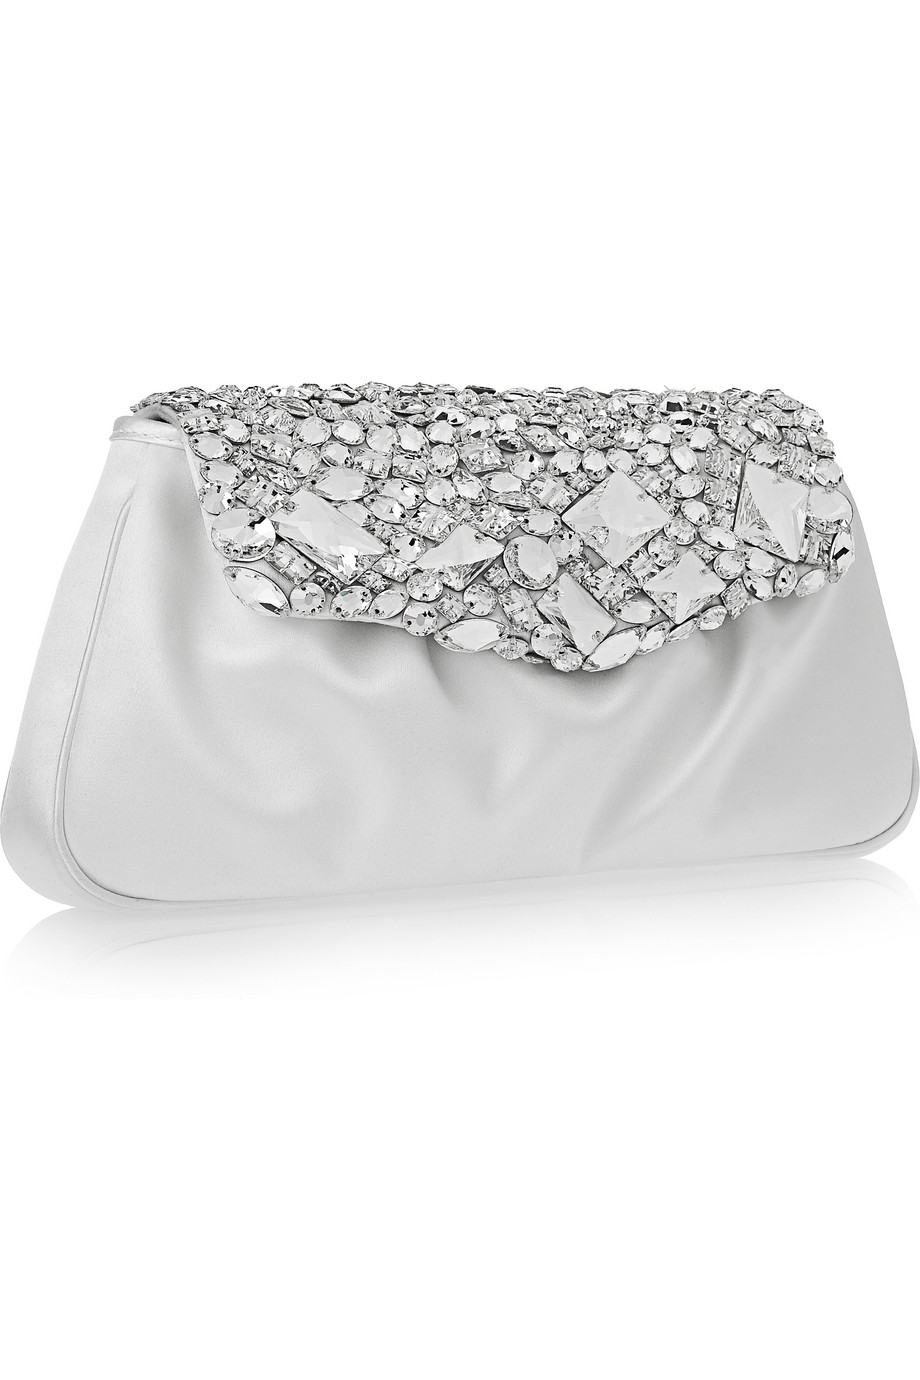 Saint Laurent Swarovski Crystal-embellished Satin Clutch in Metallic | Lyst